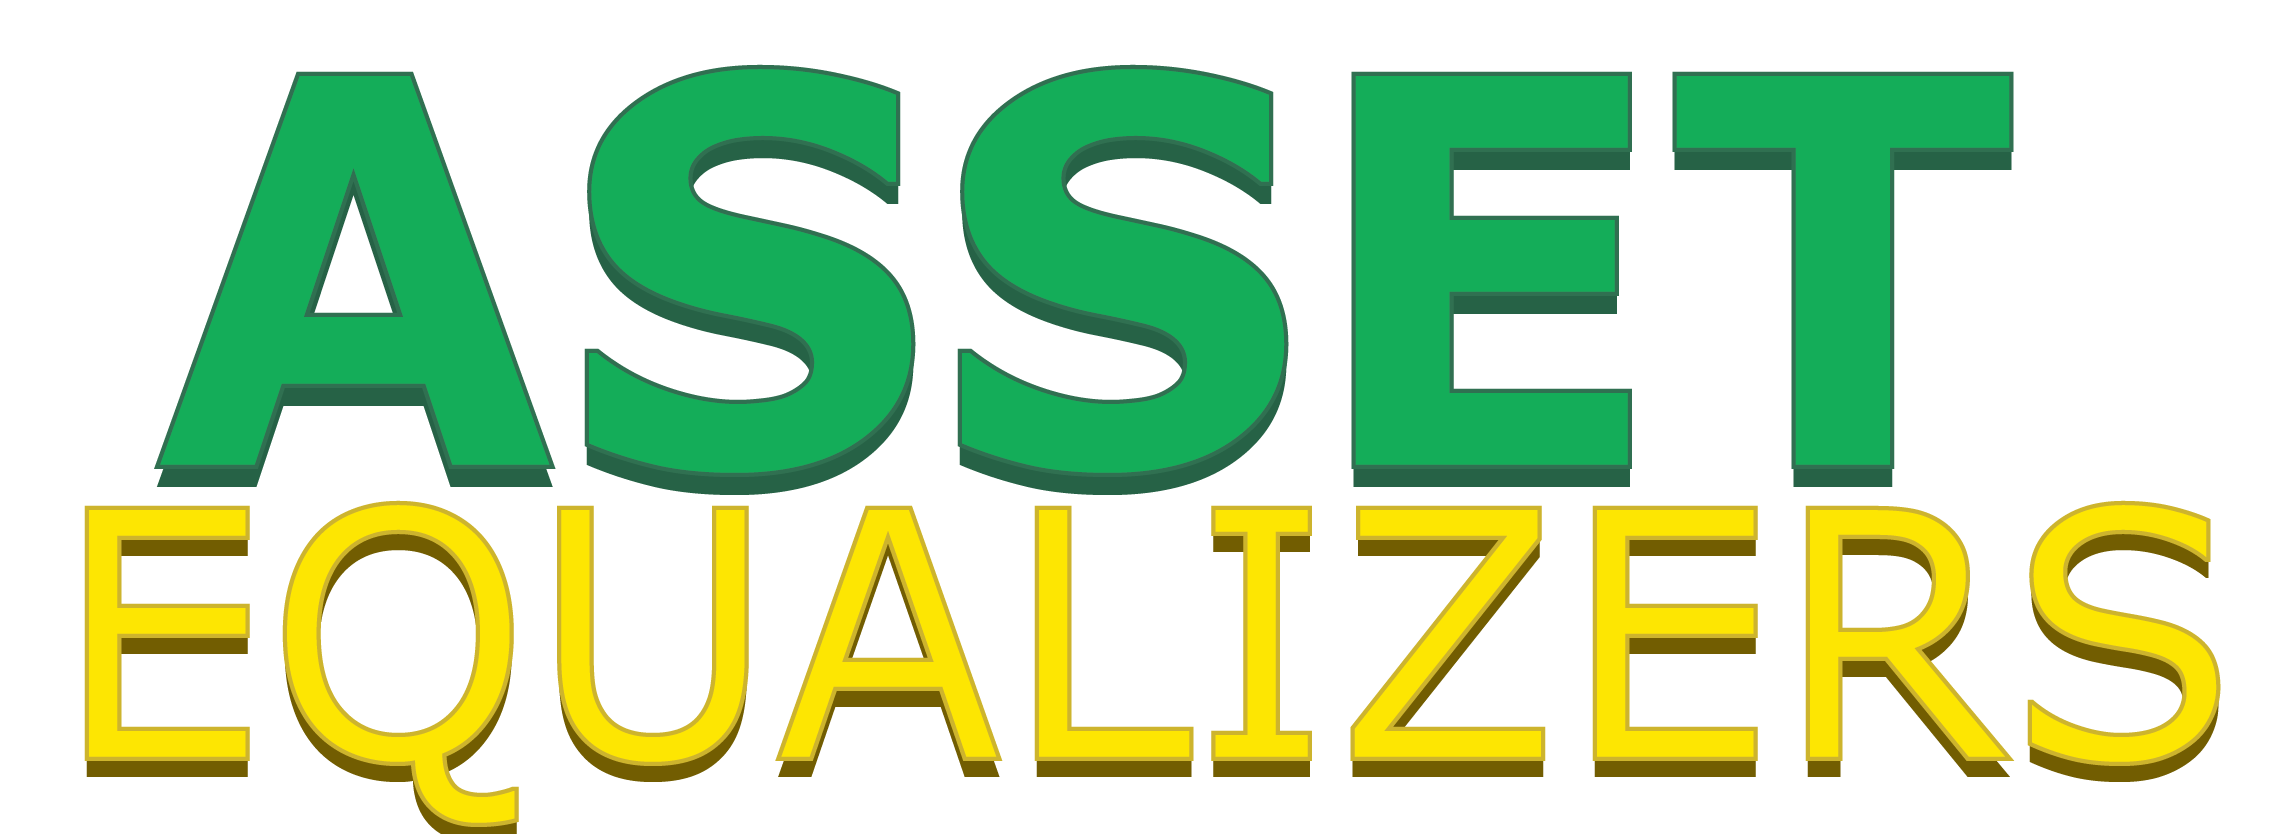 Asset Equalizers logo